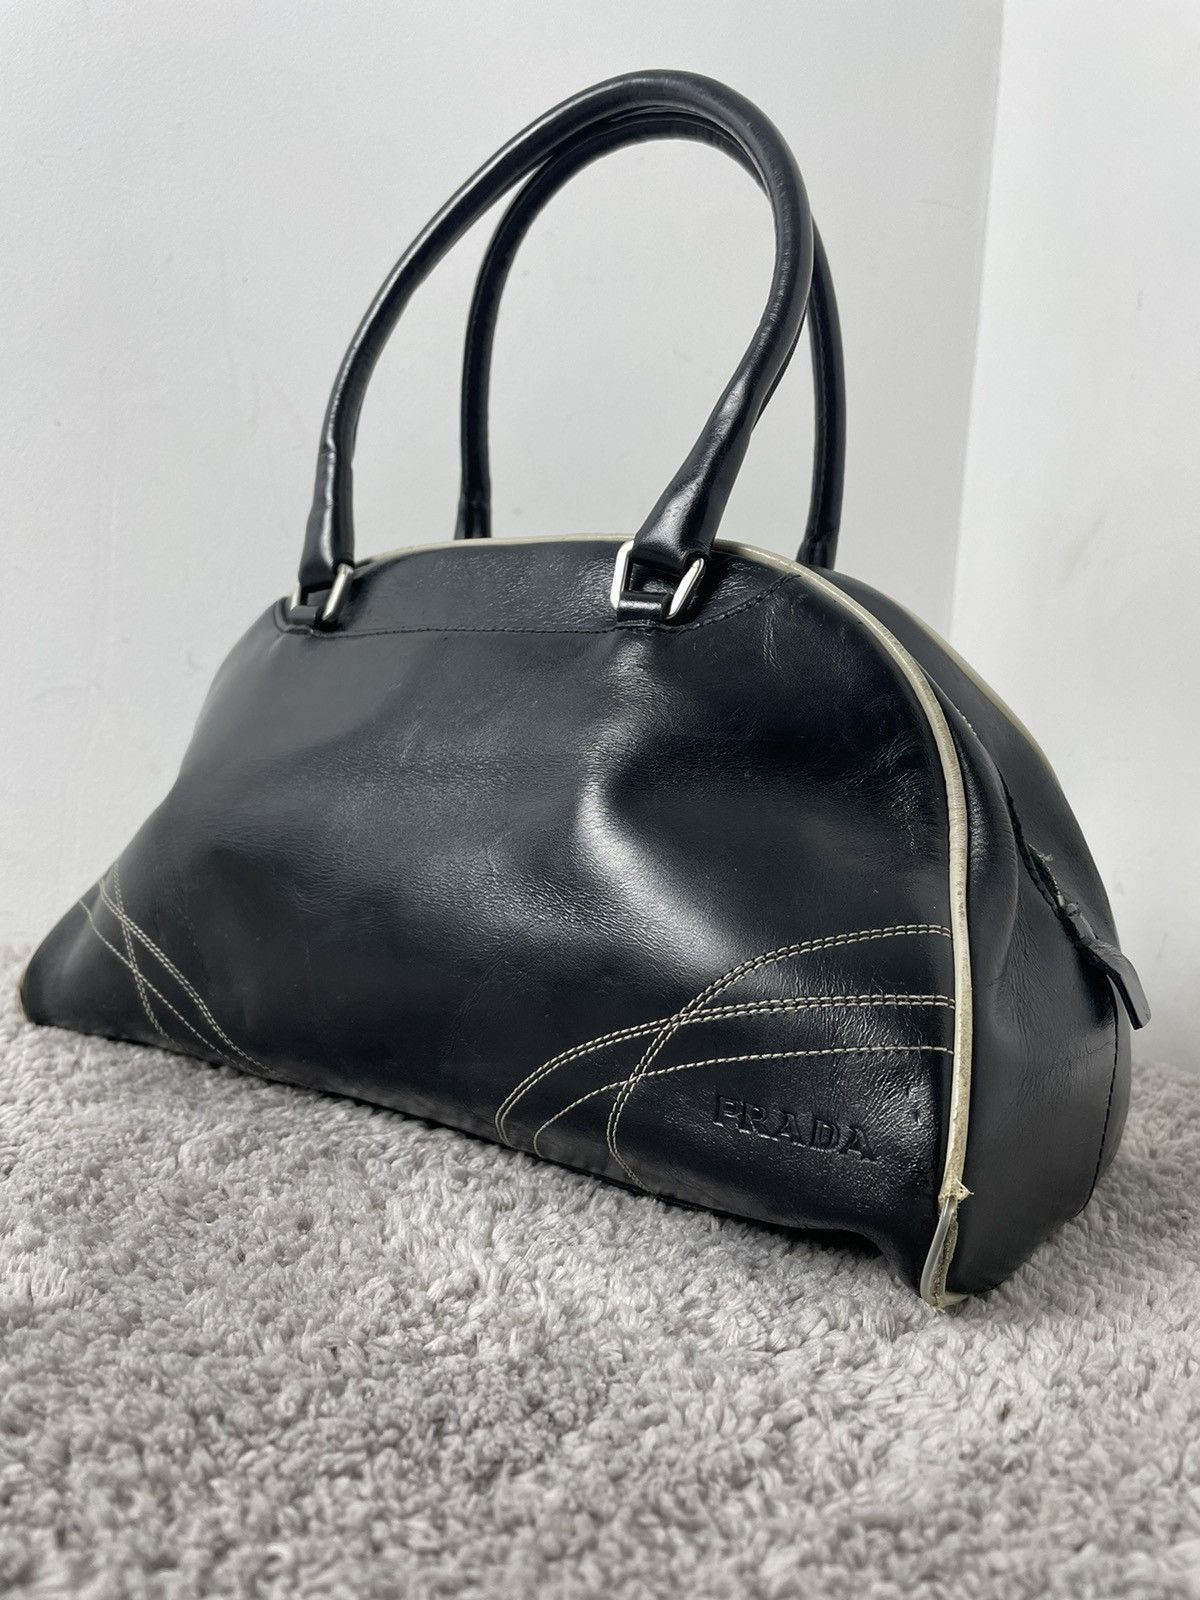 Pre-owned Prada Black Leather Handbag White Leather Bag Vintage